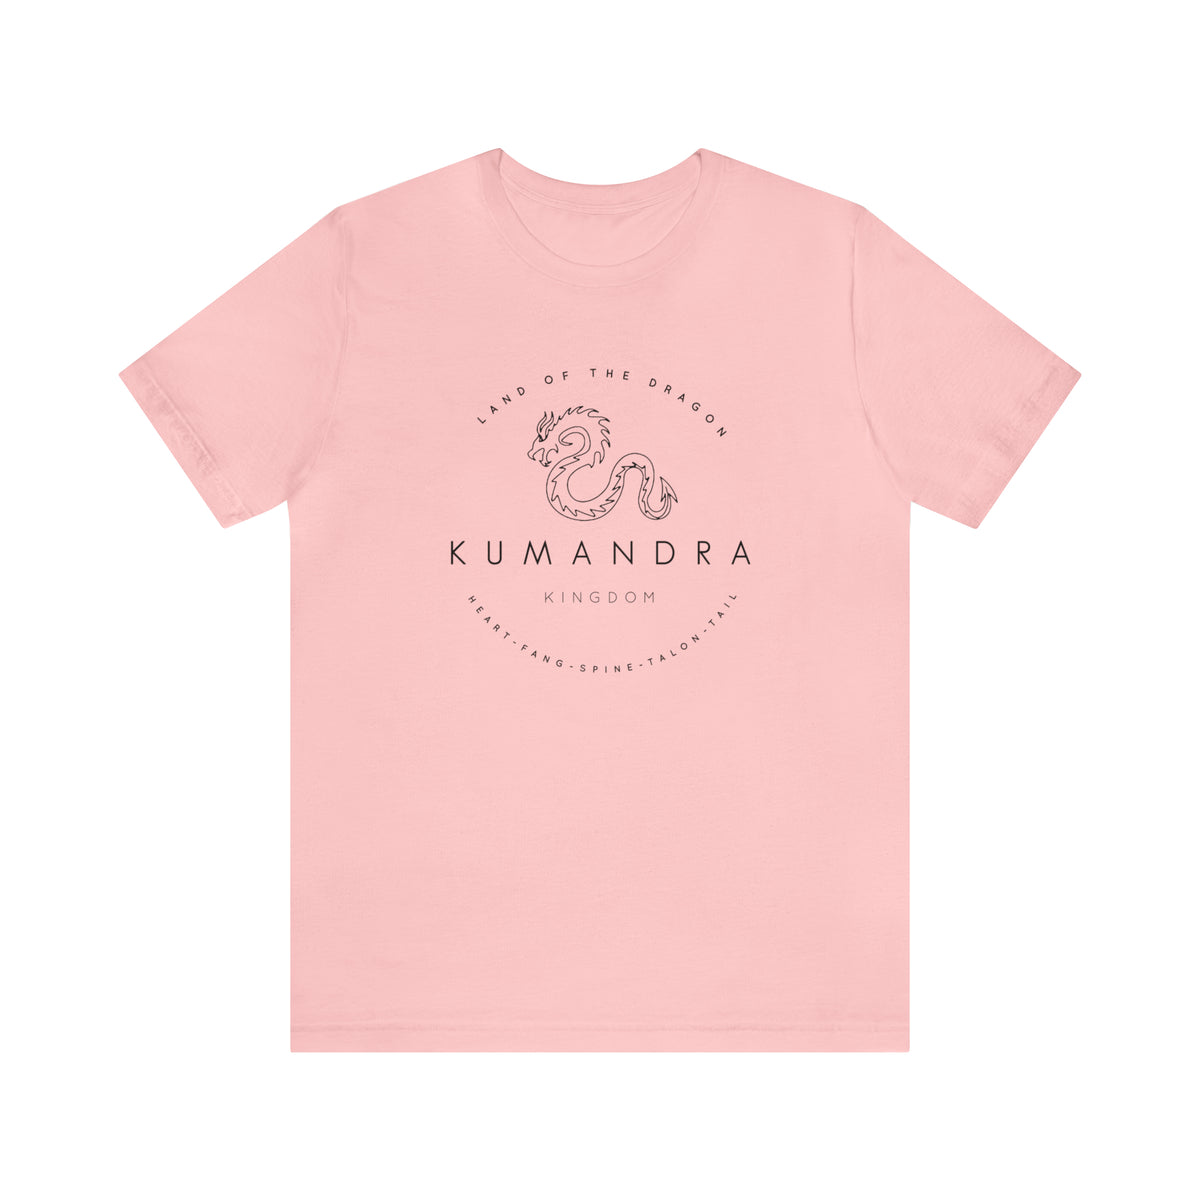 Kumandra Bella Canvas Unisex Jersey Short Sleeve Tee